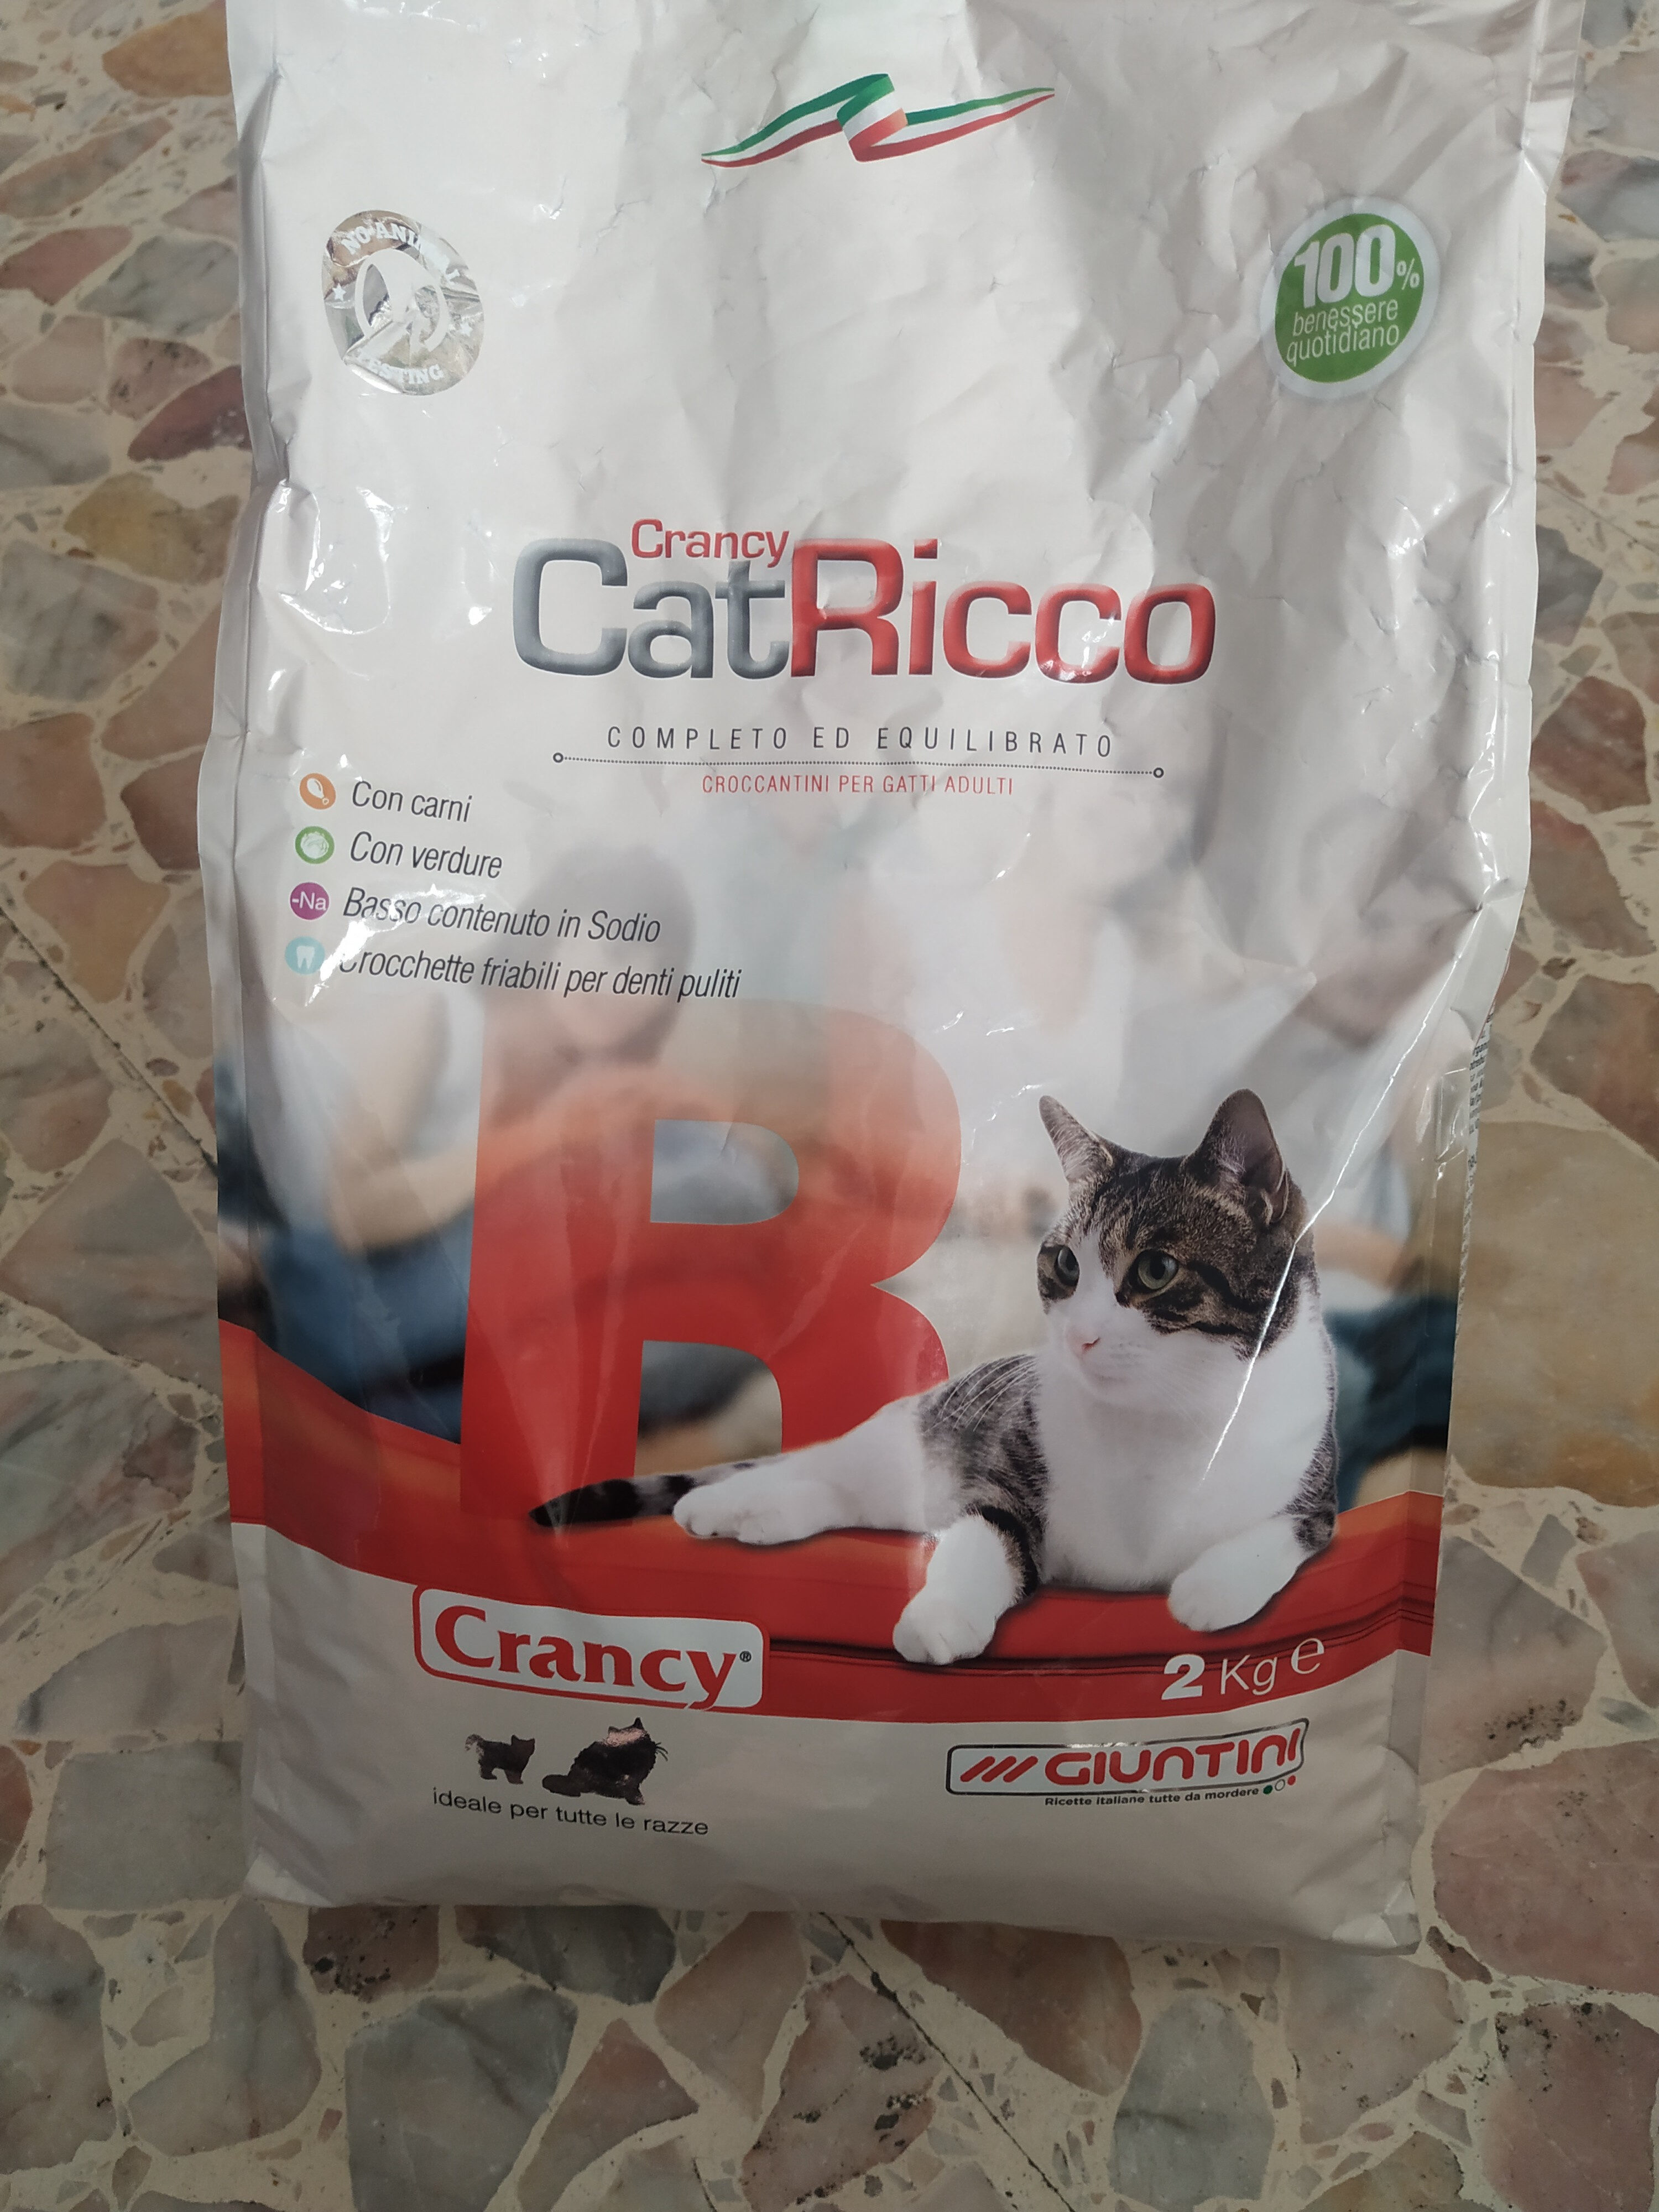 Crancy CatRicco - Product - it